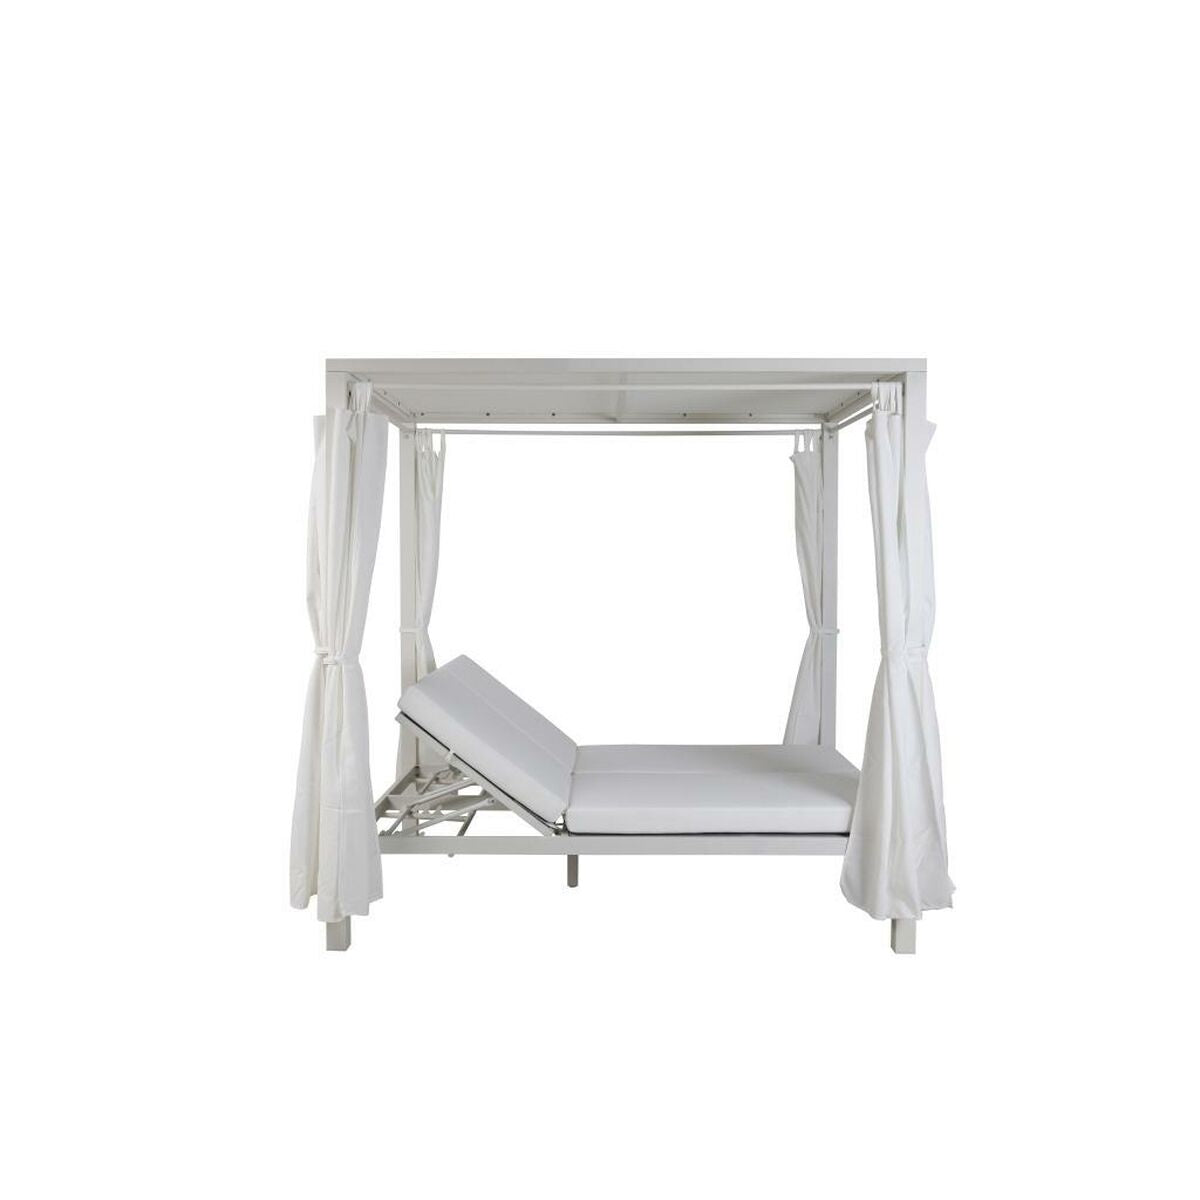 Luxury Design Greece Garden Bed White Aluminum (148 x 188 x 205 cm)